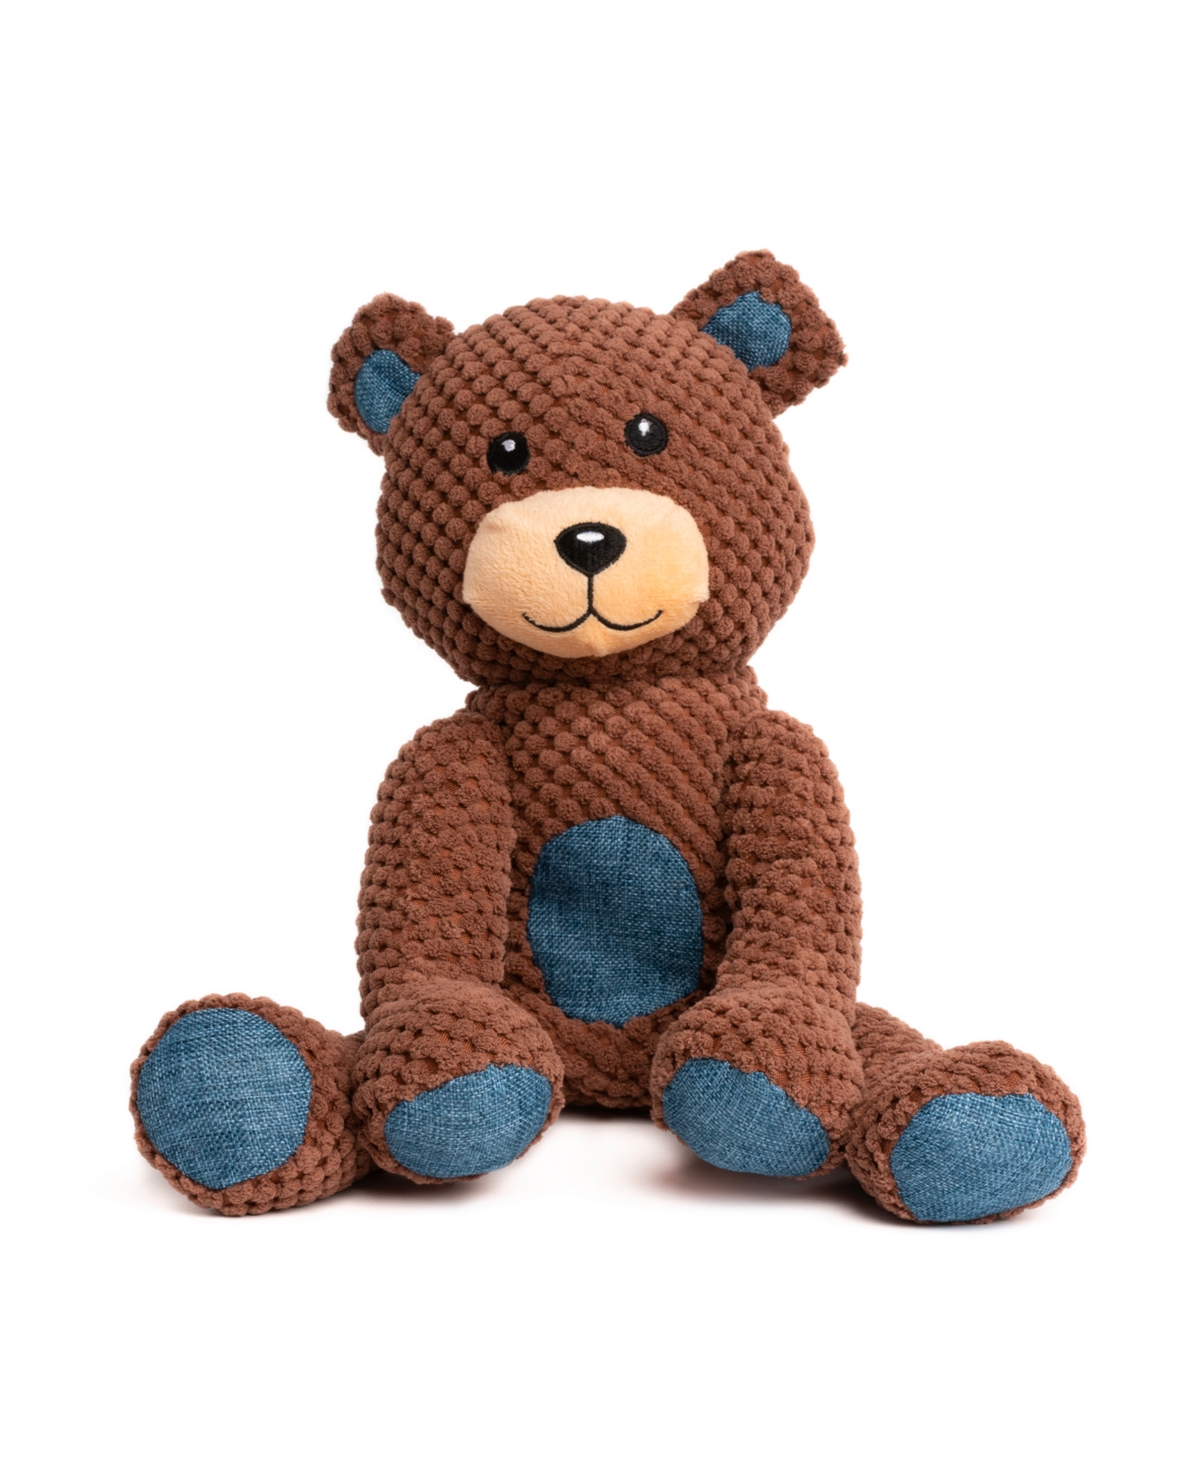 Floppy Teddy Bear - Brown